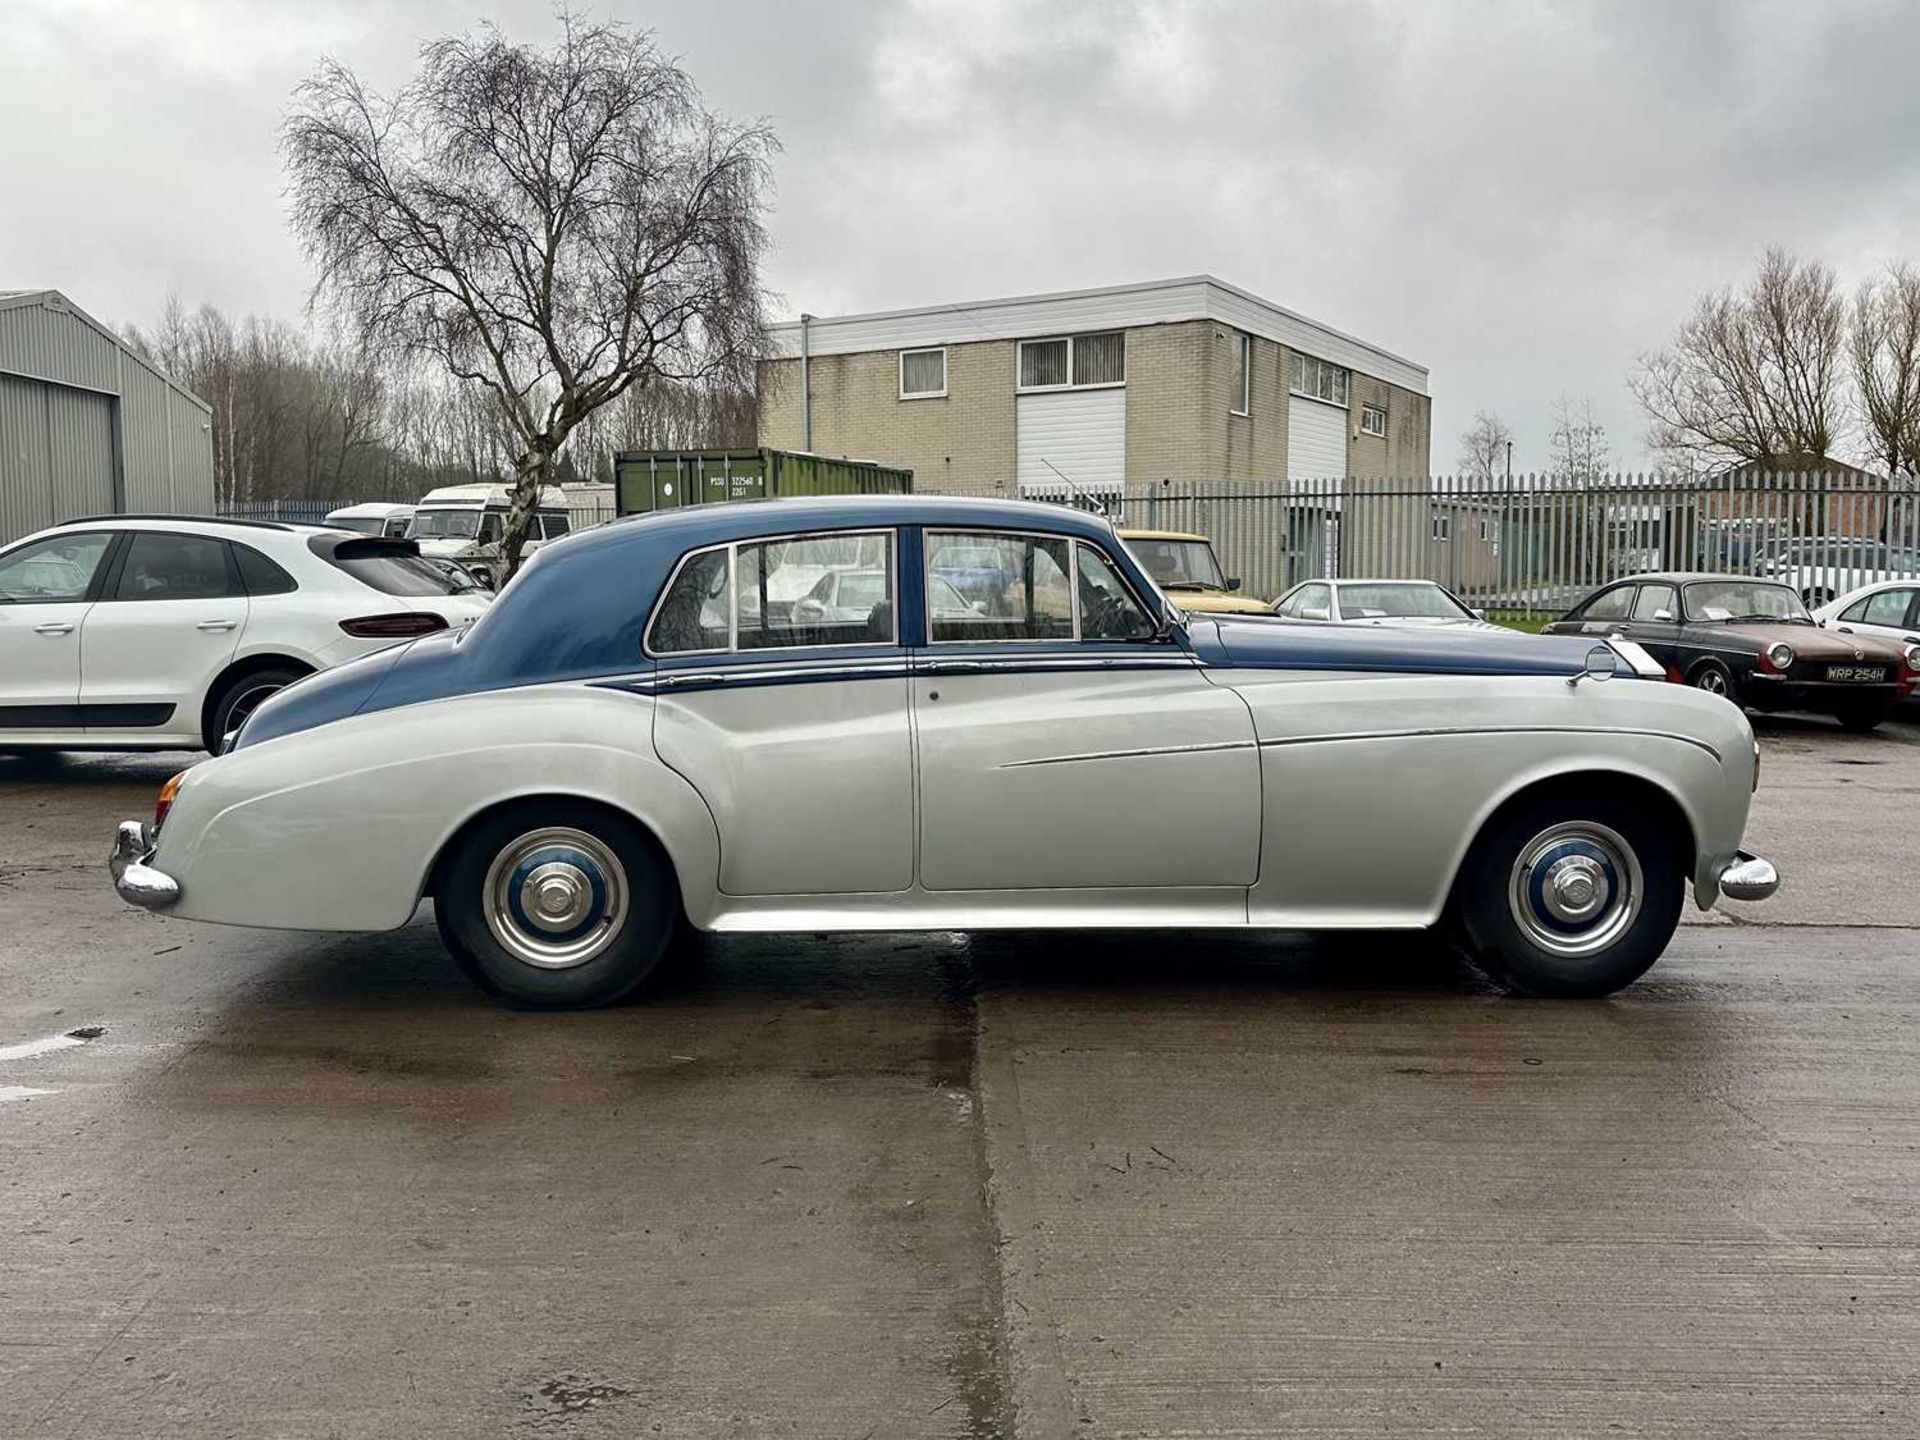 1963 Rolls Royce Silver Cloud III - Image 8 of 14